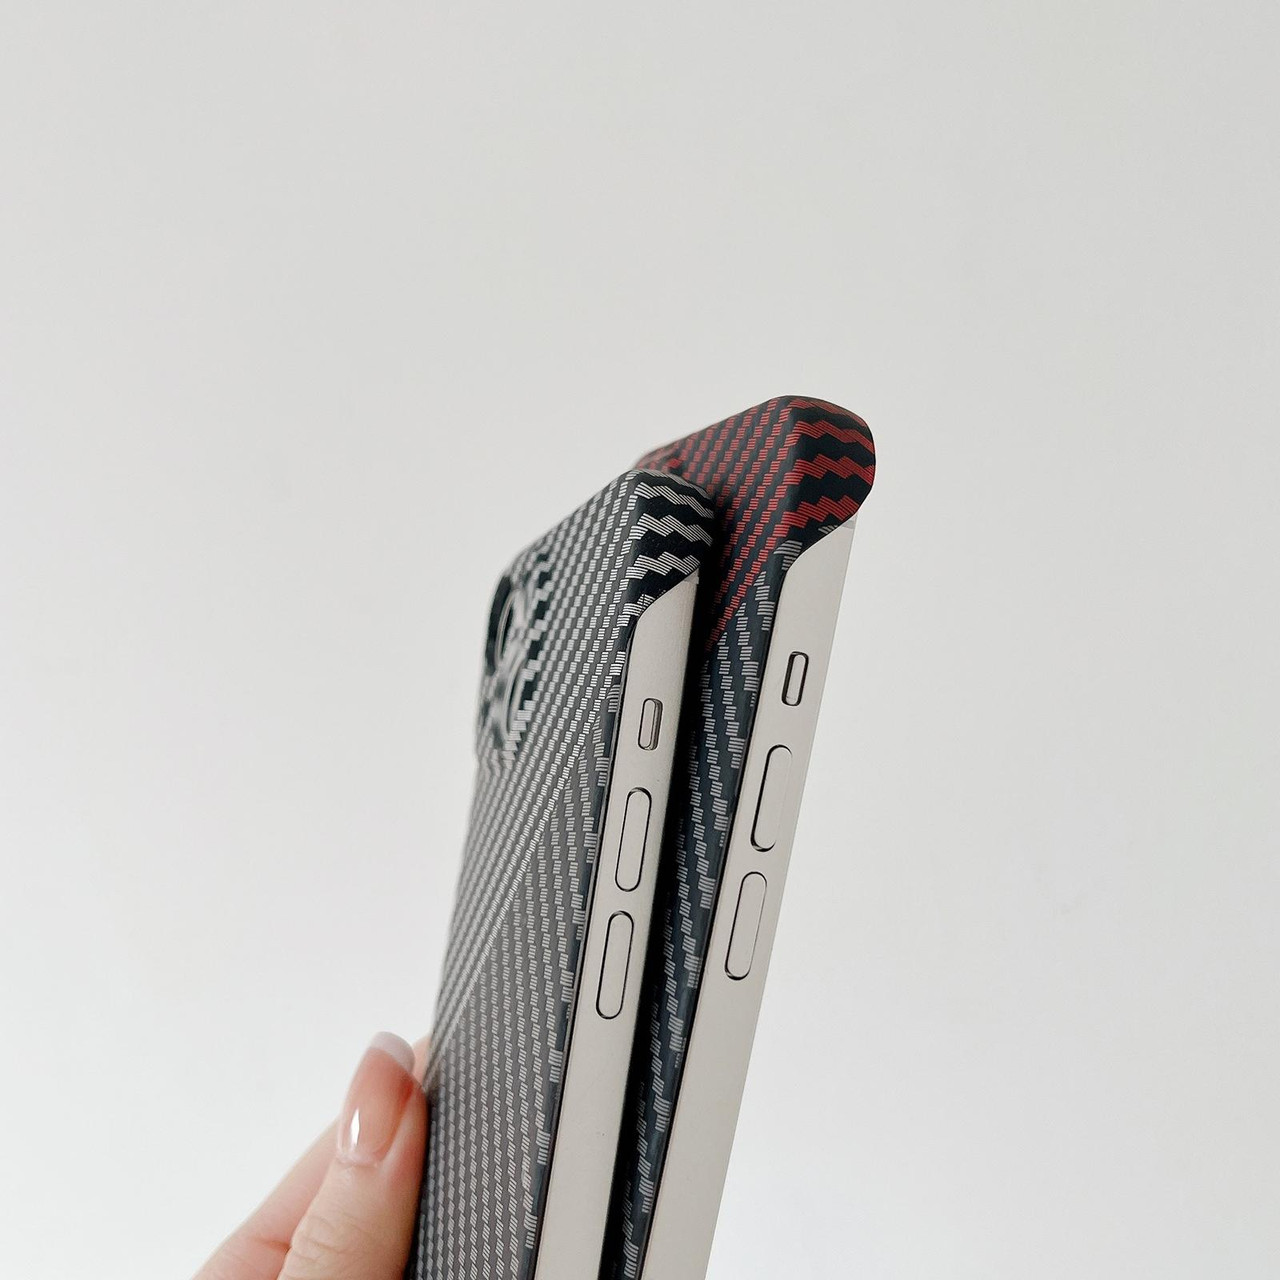 X-LEVEL Nano Kevlar Series for iPhone 14 Pro Max Carbon Fiber